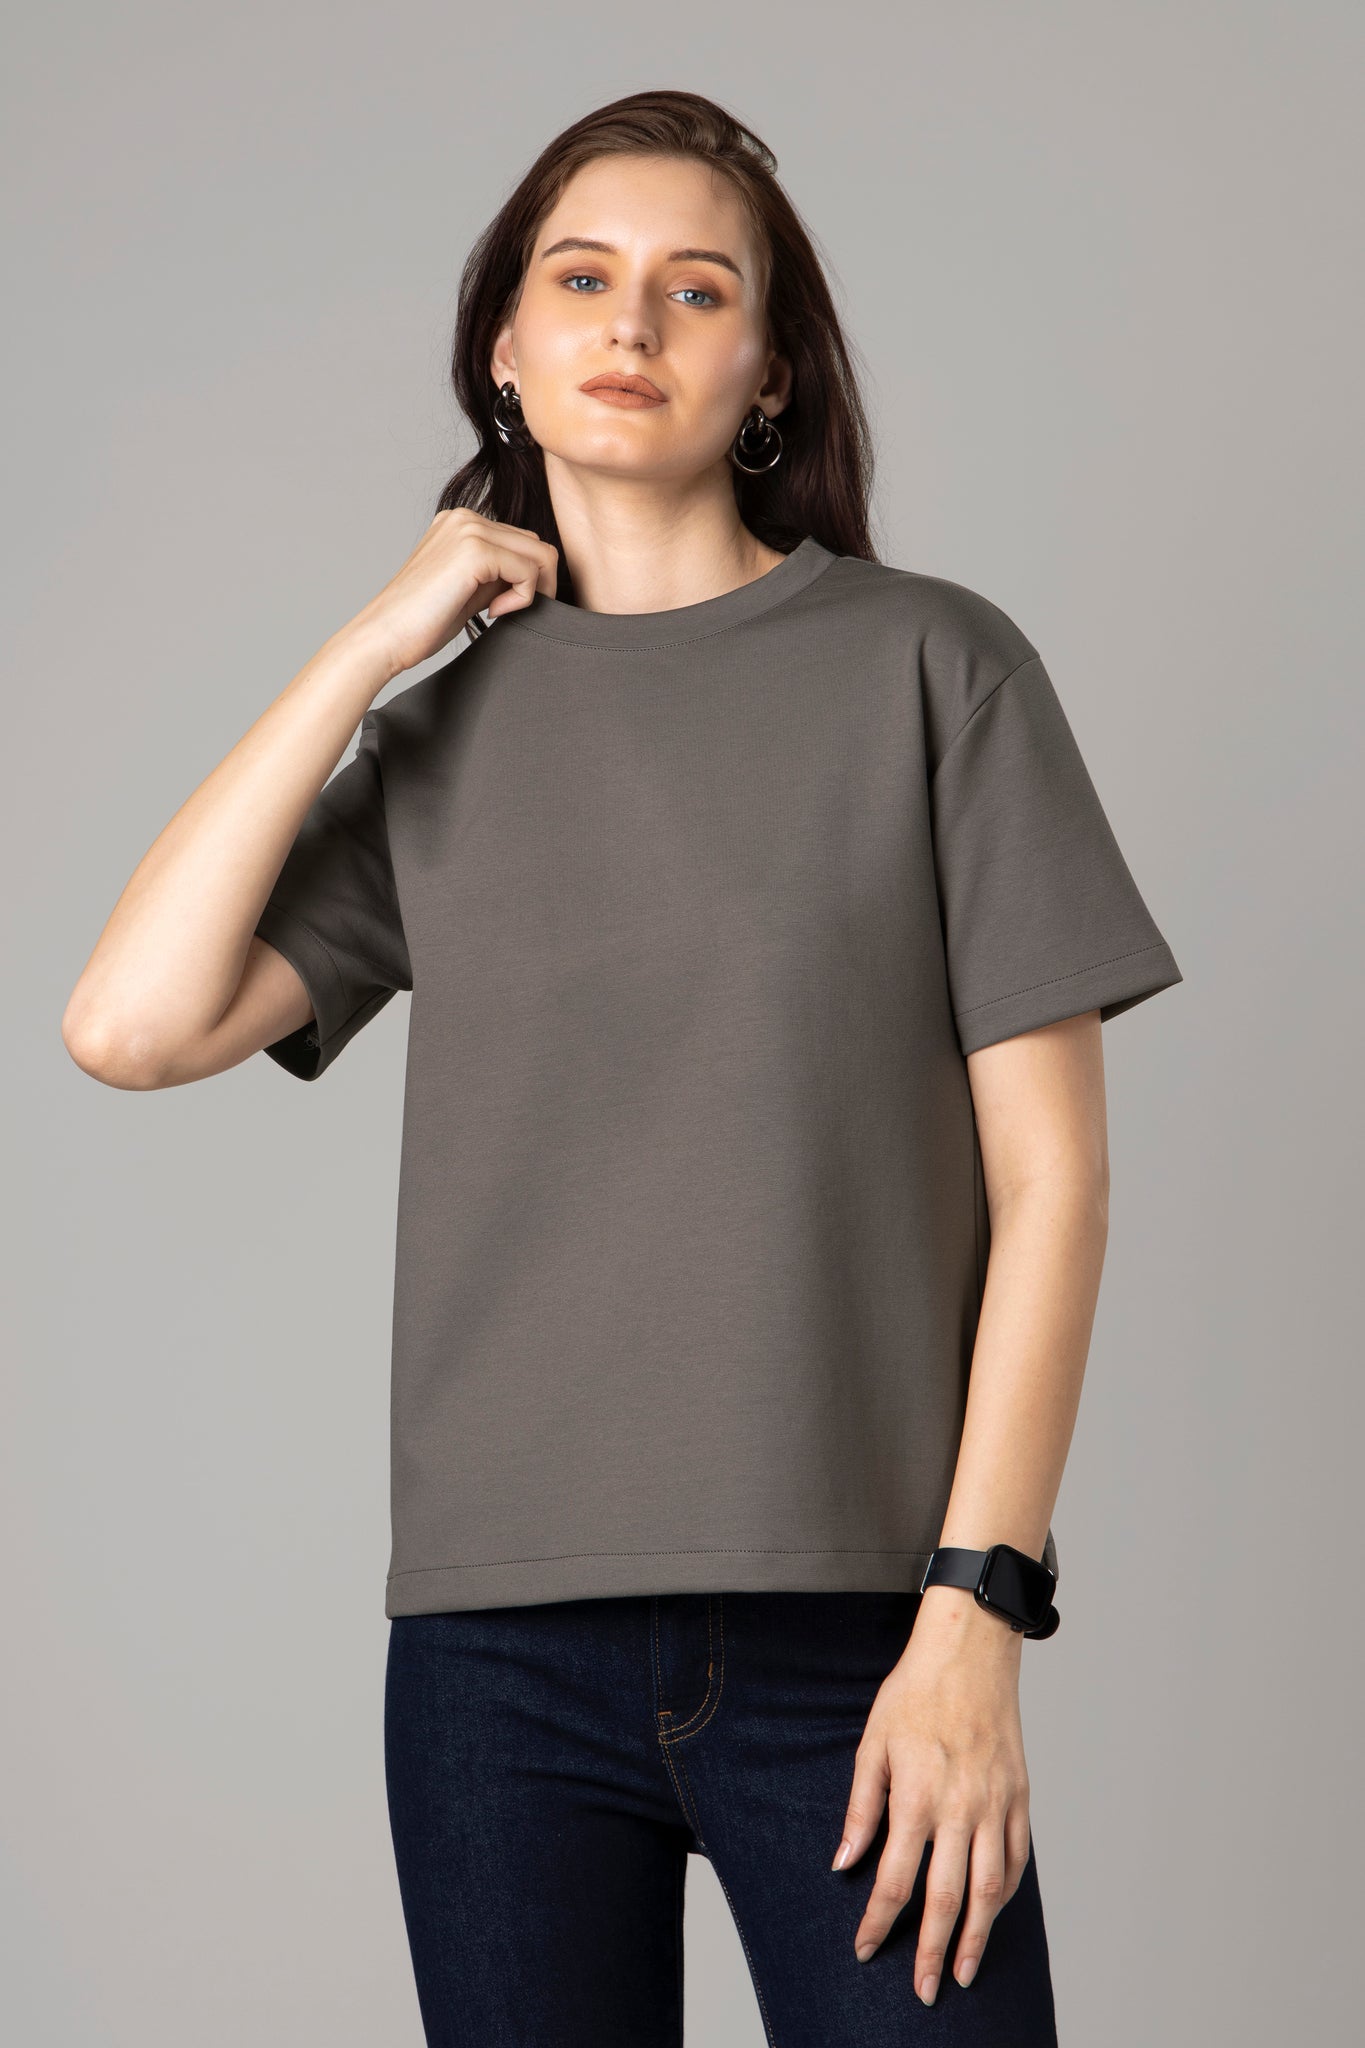 Classic Plain T-Shirt For Women